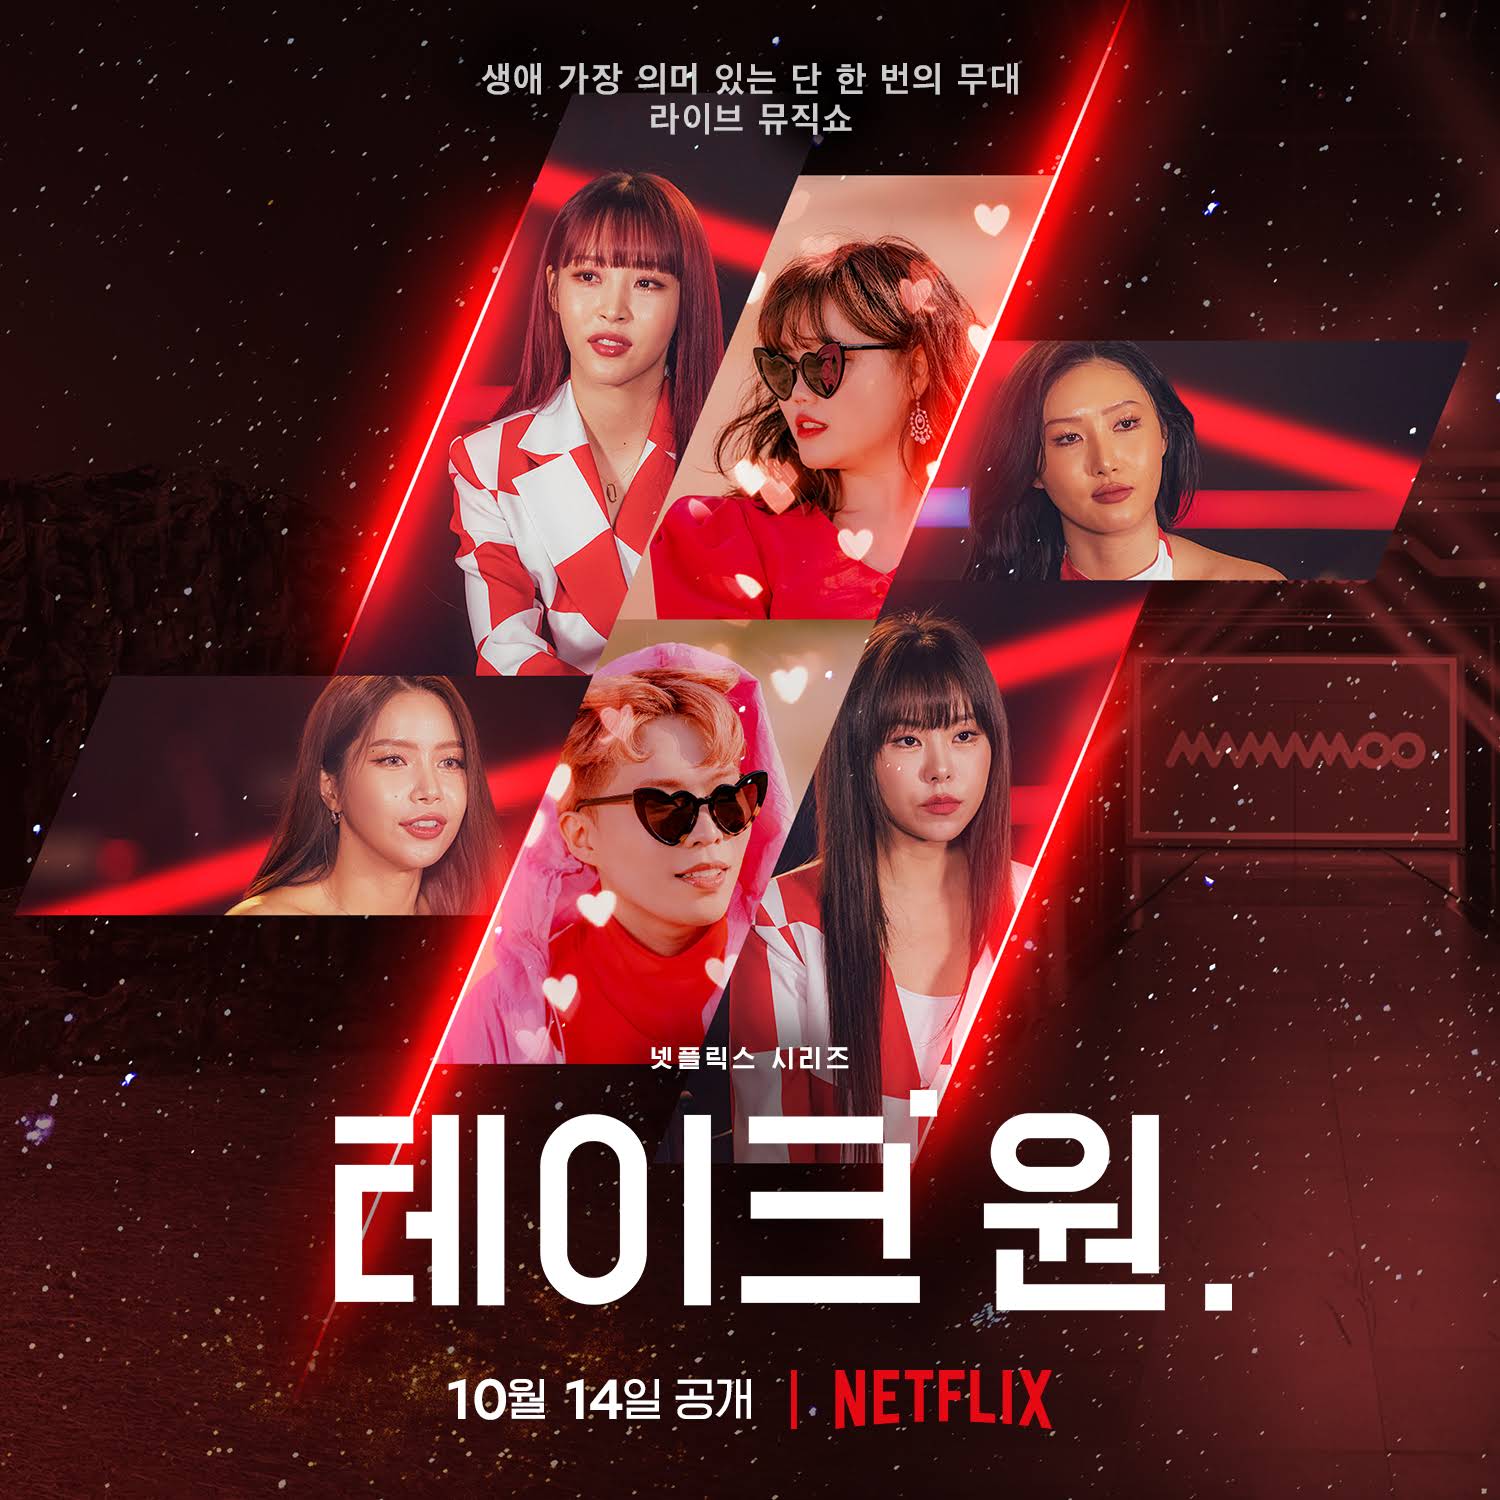 programa de variedades de música coreana toma 1 que llegará a netflix en octubre de 2022 cartel 2